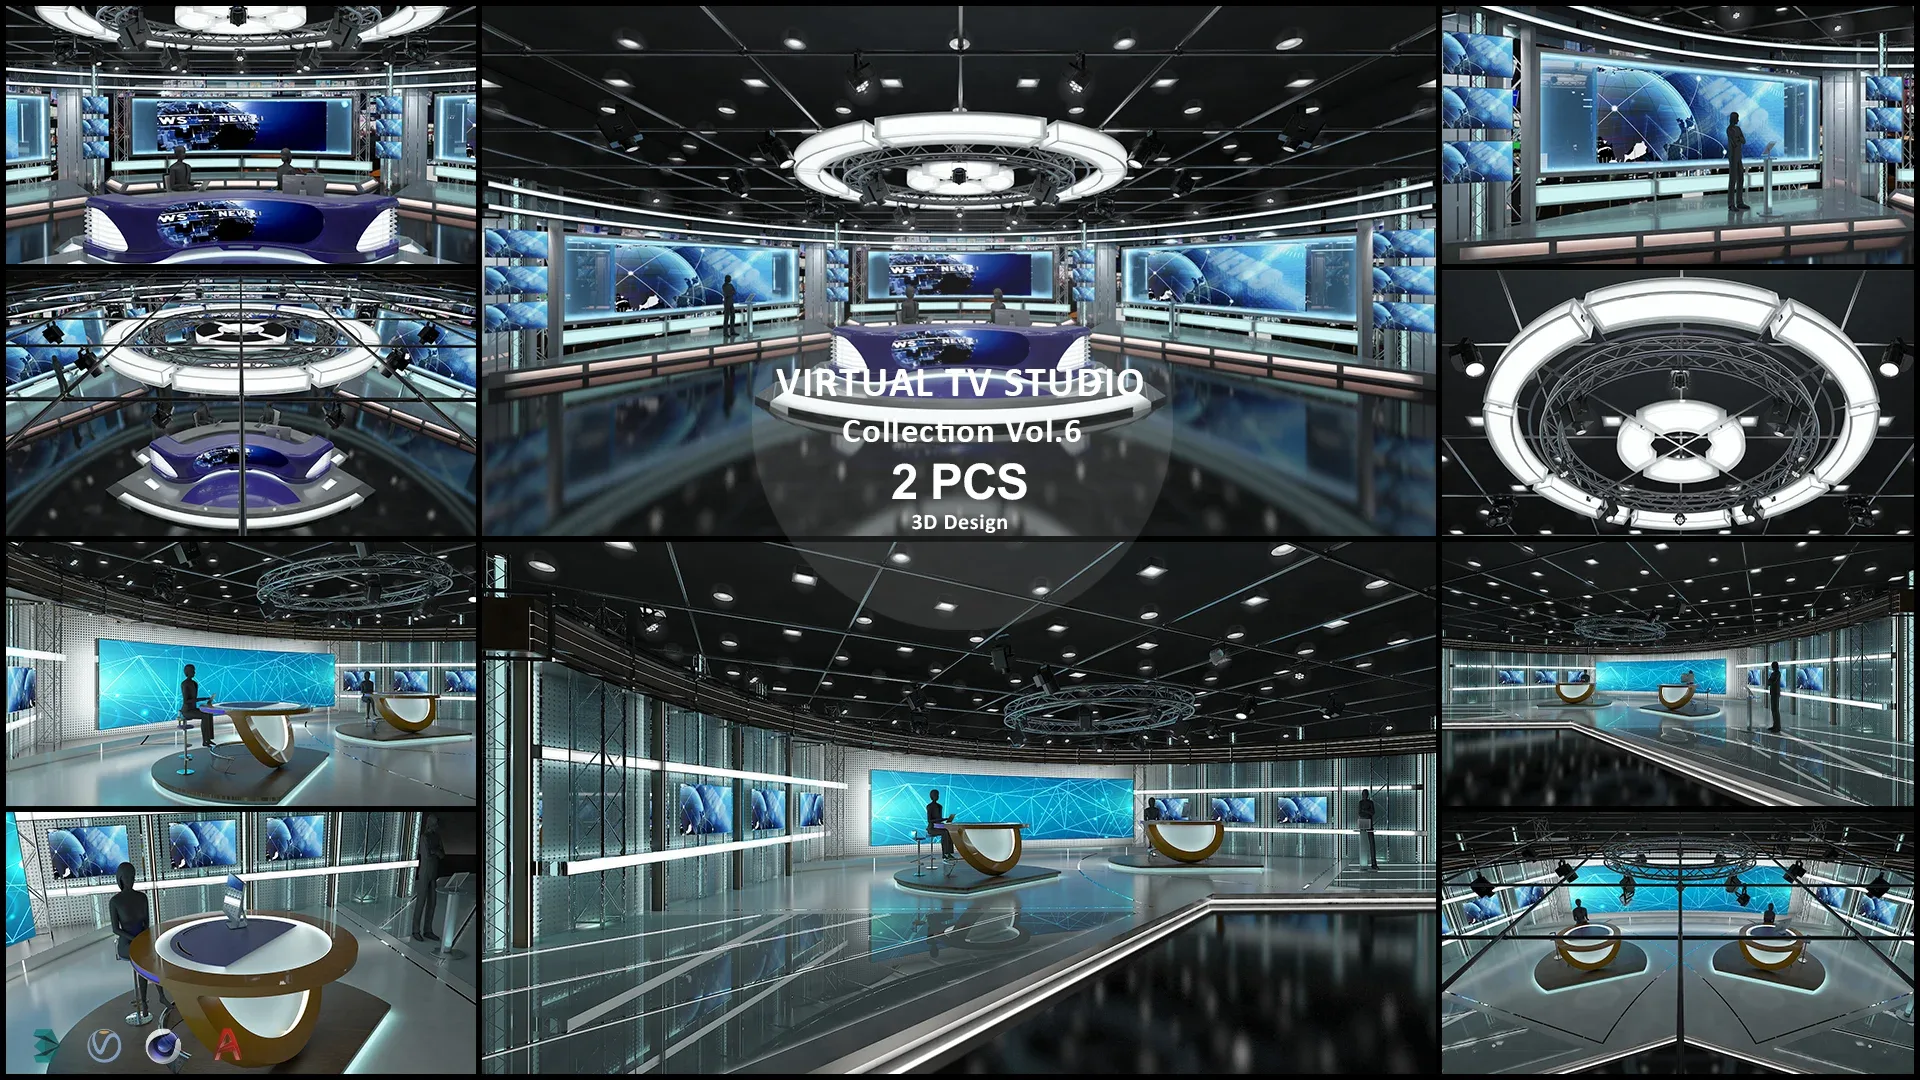 Virtual TV Studio Collection Vol 6 - 2 PCS DESIGN